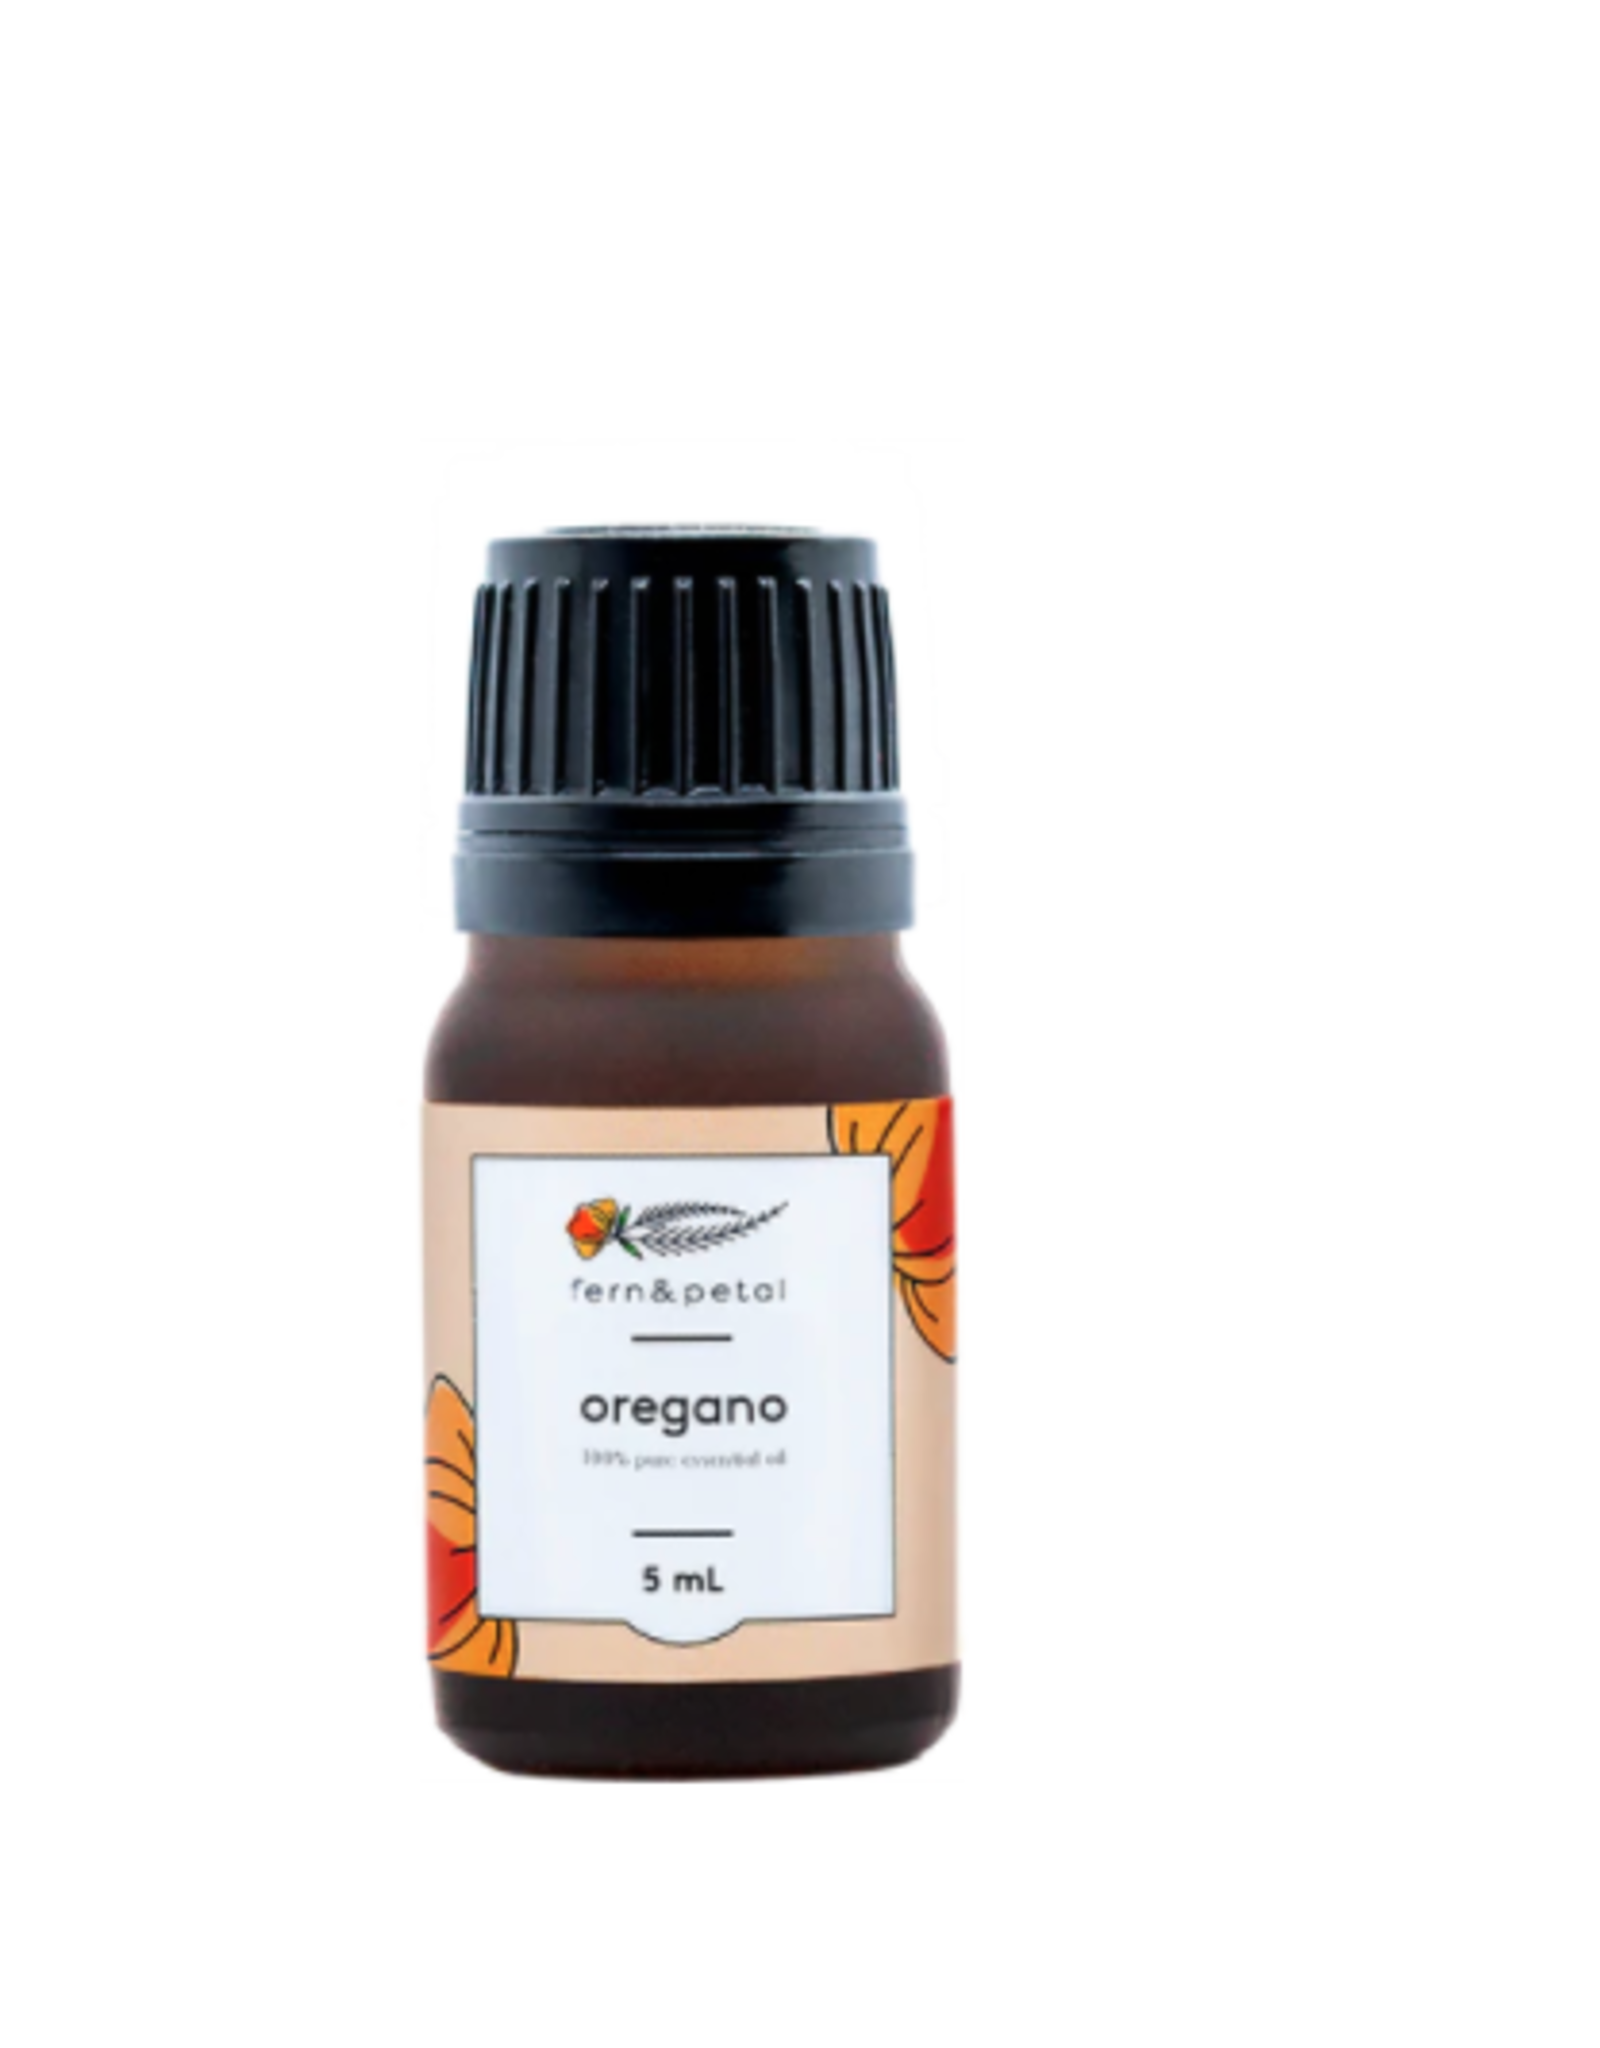 Fern & Petal Oregano Essential oil 5ml